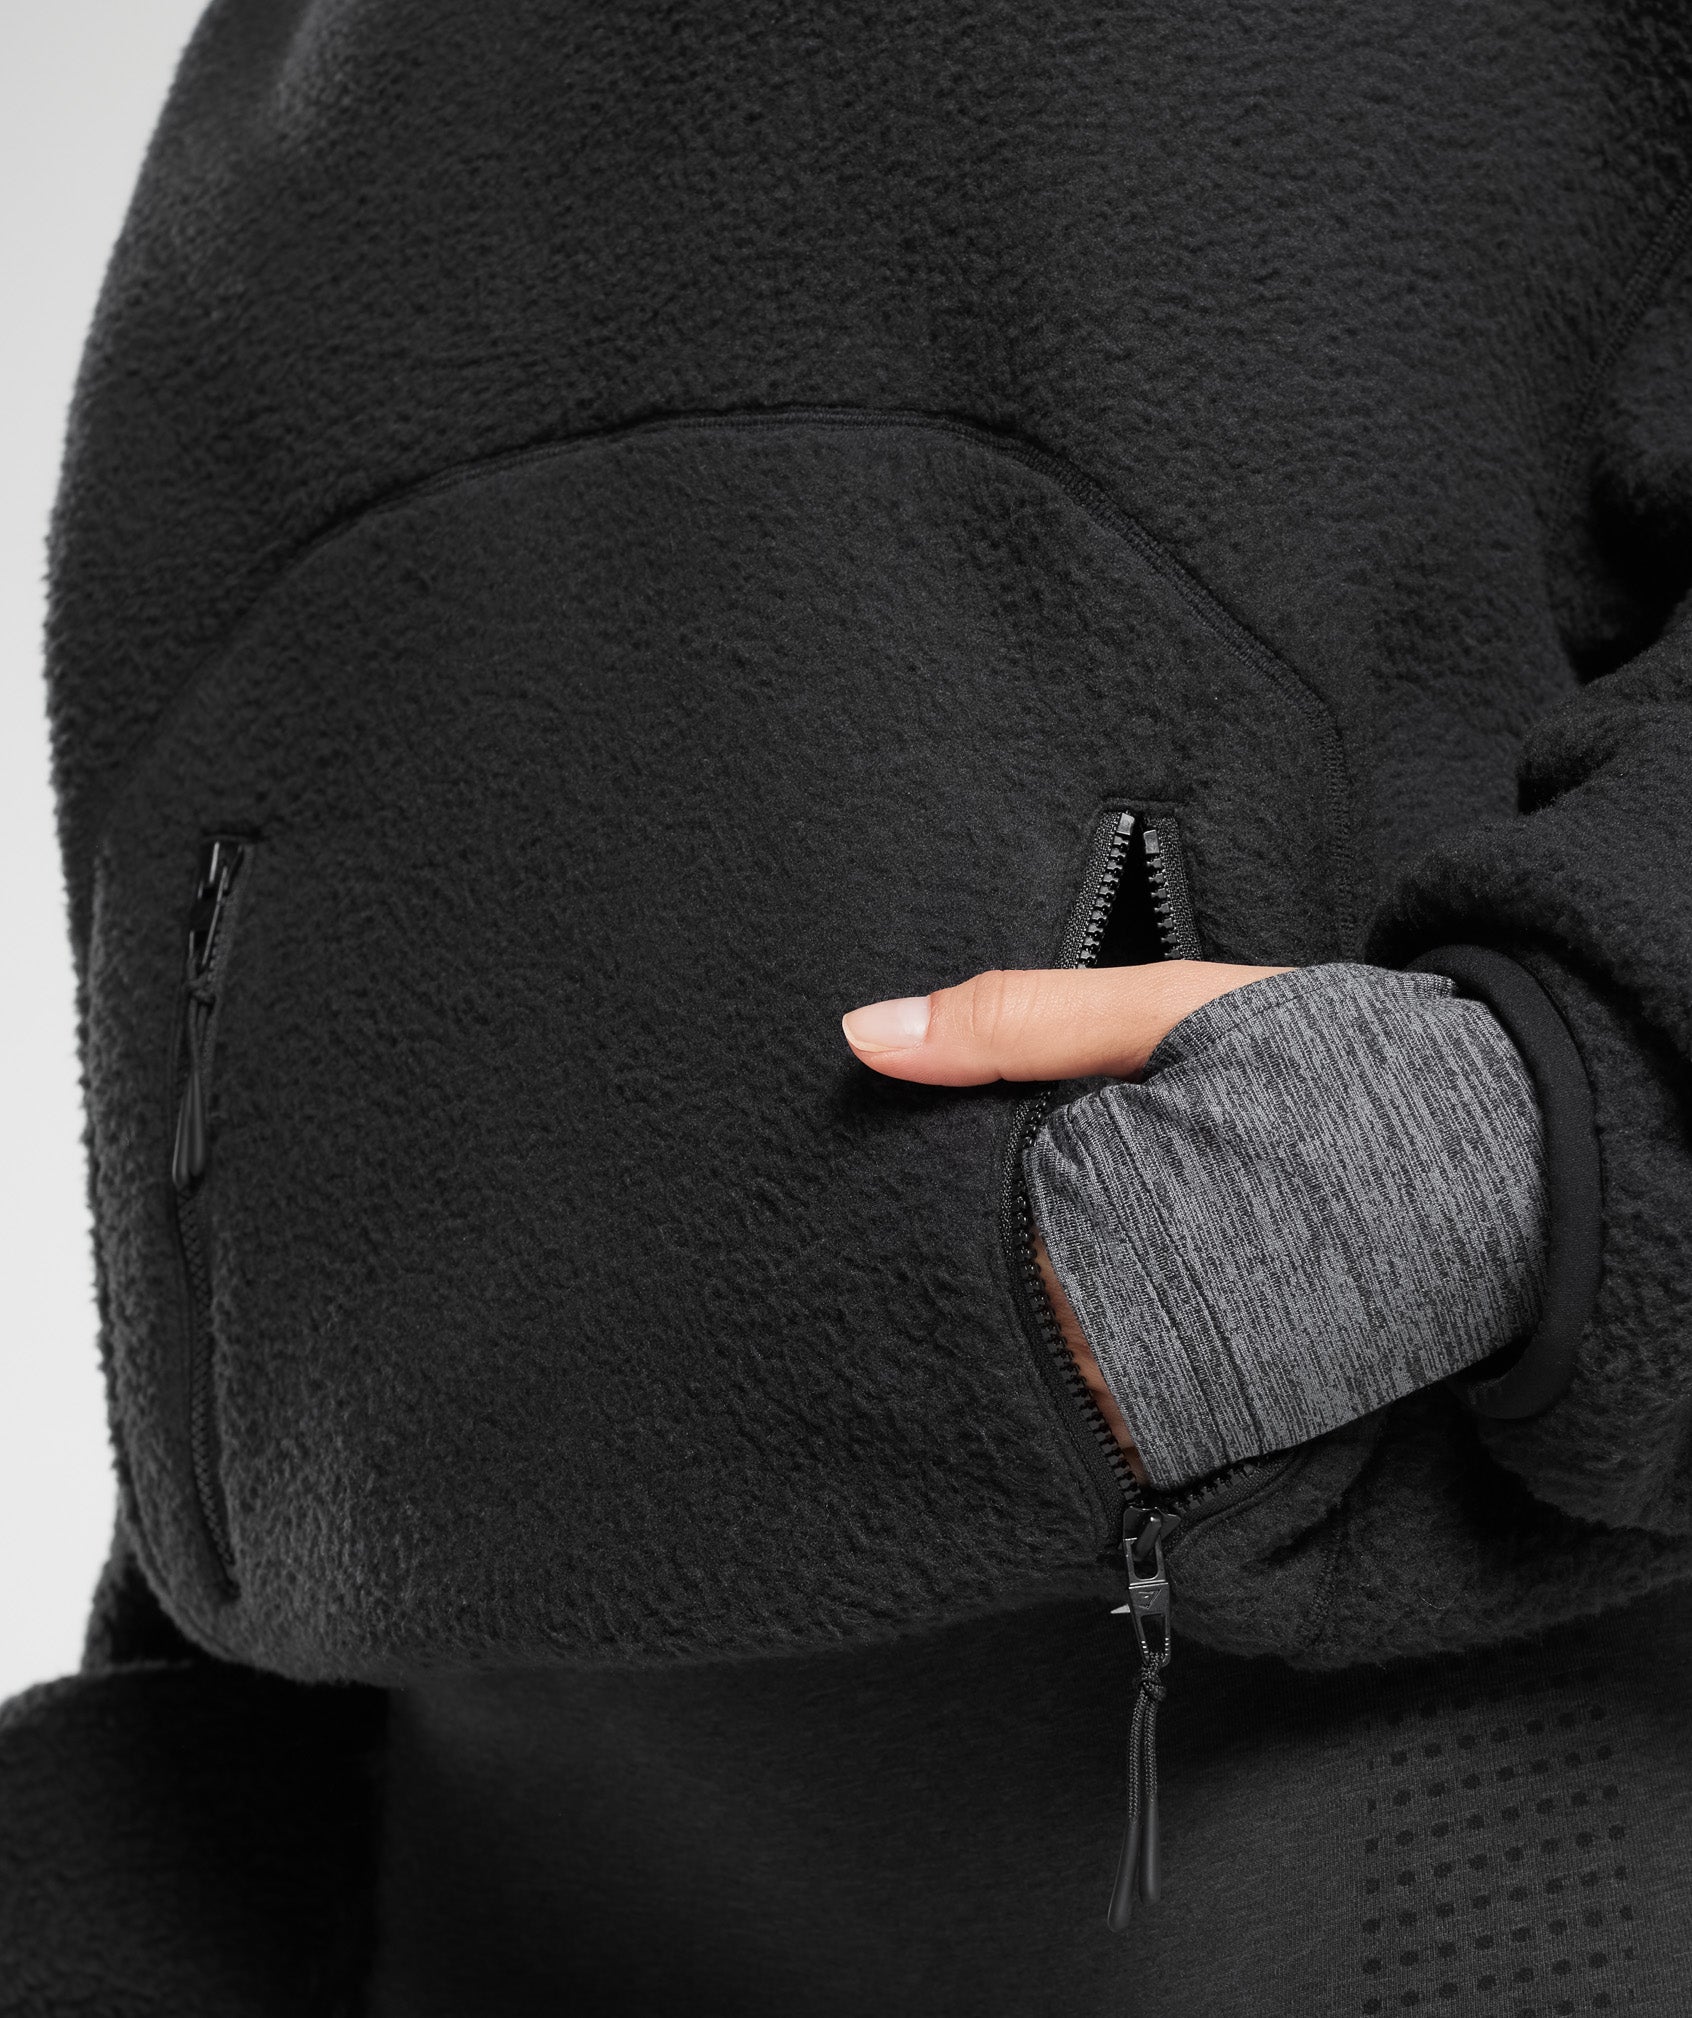 Holt Textured Fleece in Black - view 7